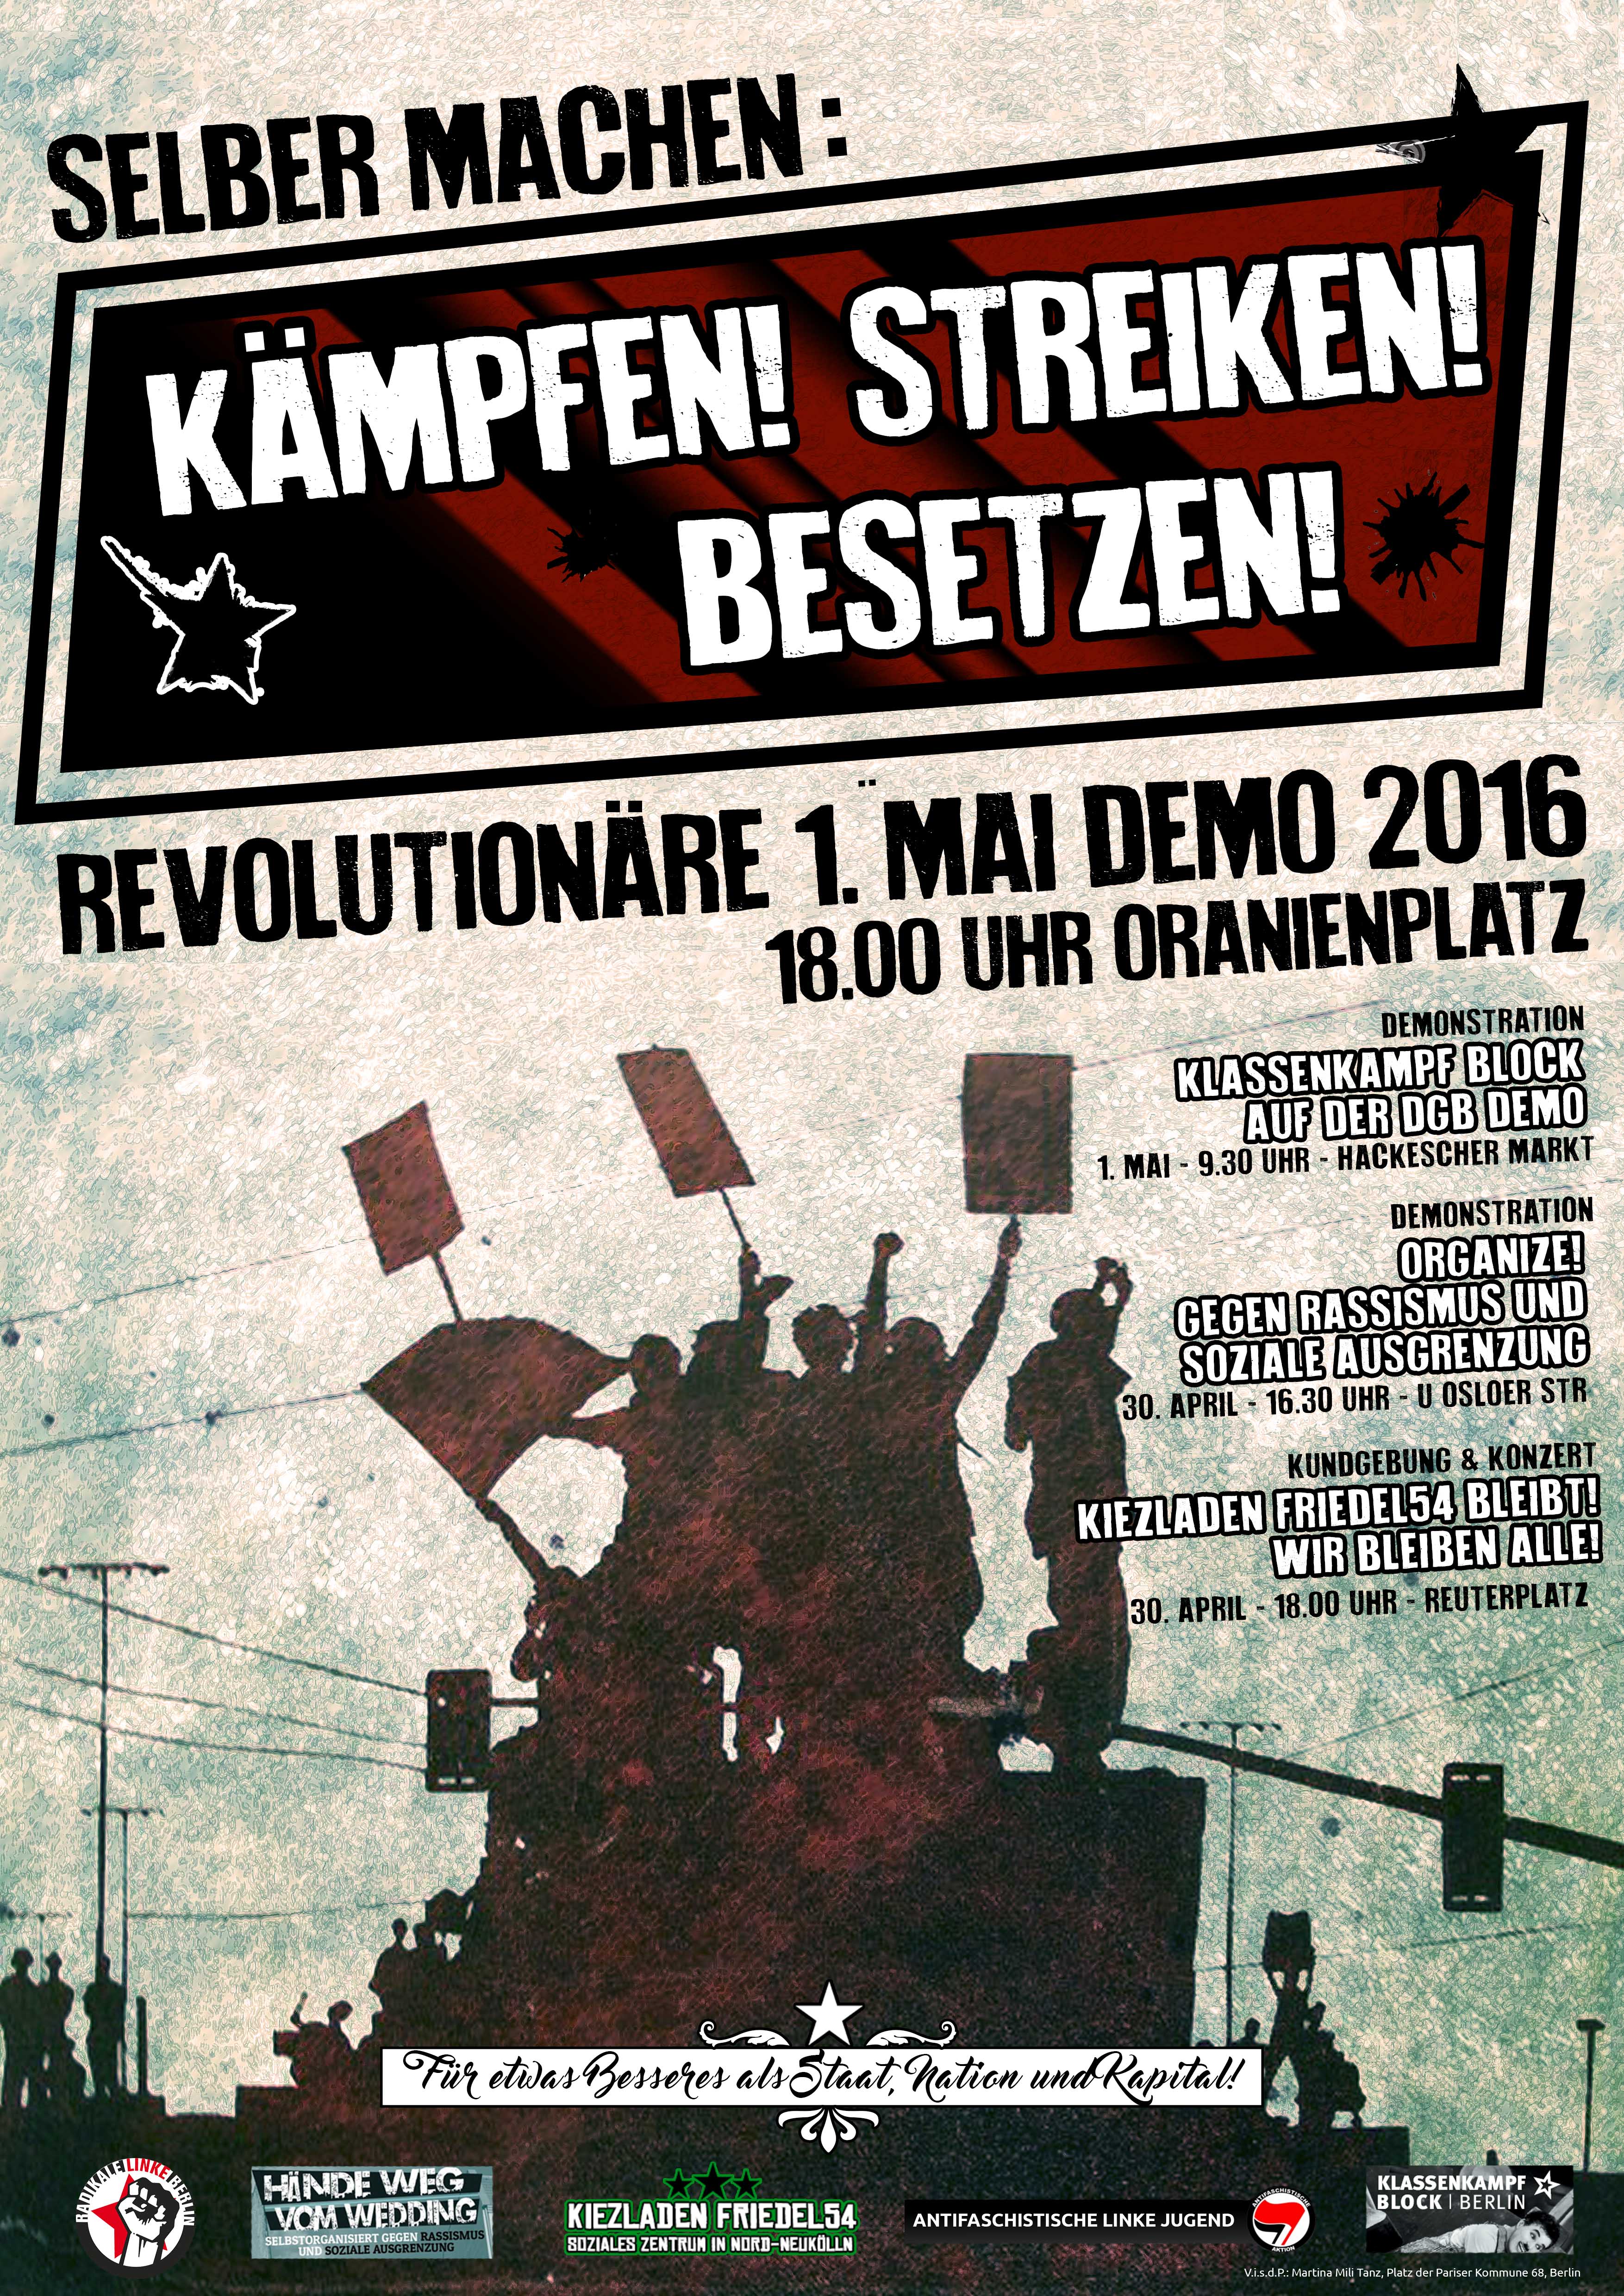 Selber Machen Kampfen Streiken Besetzen Revolutionarer 1 Mai